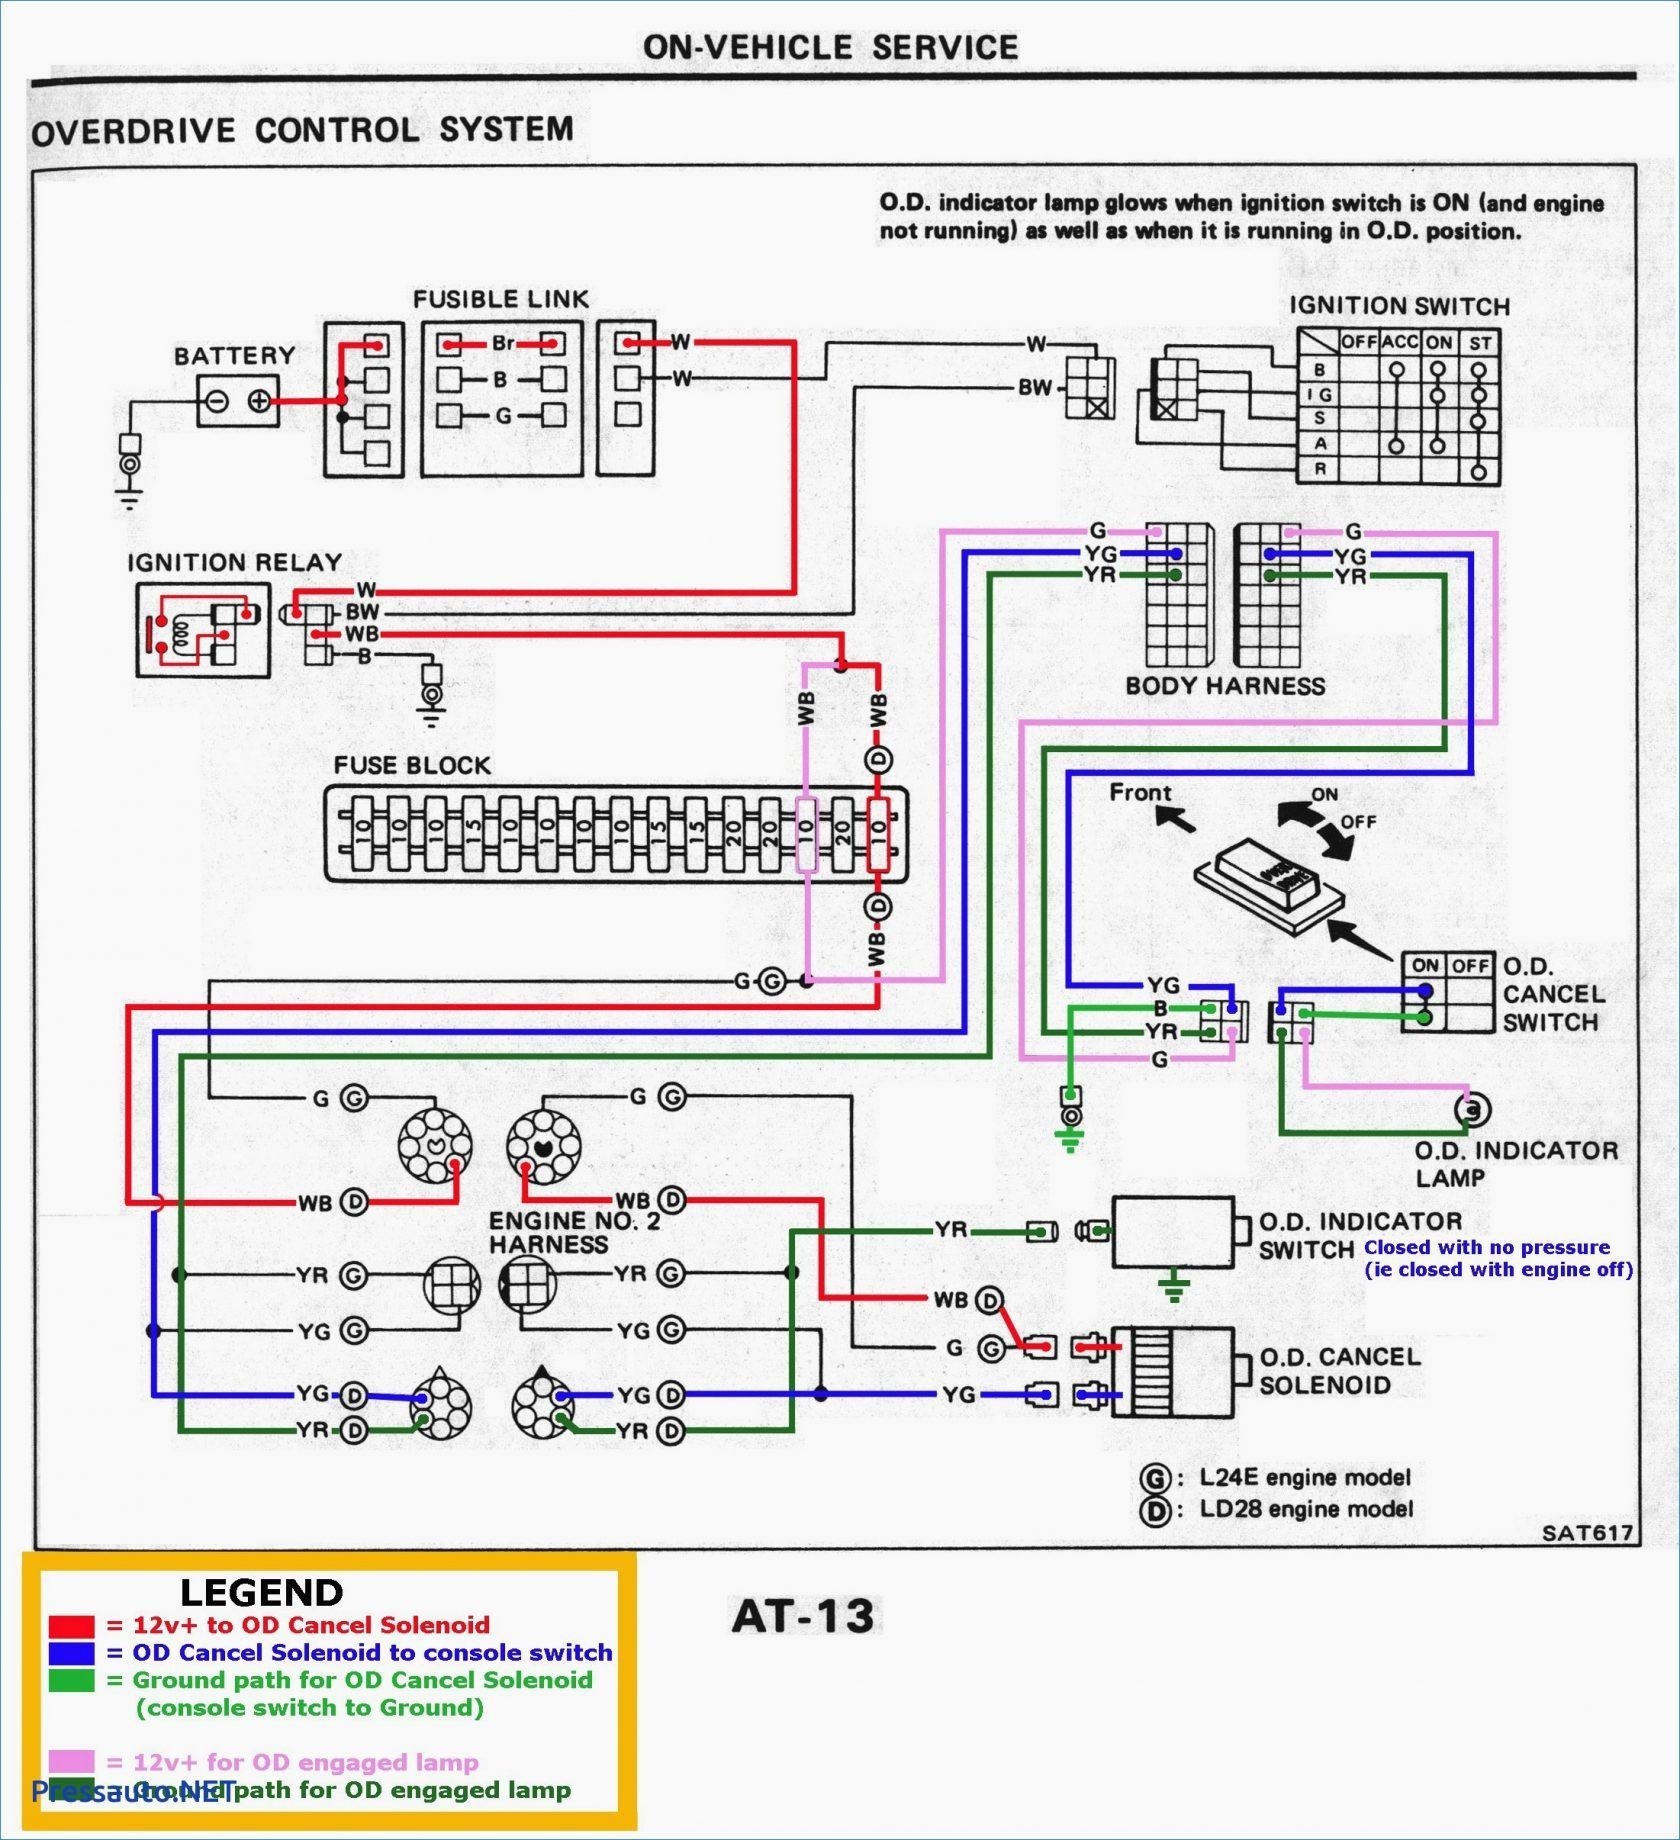 Chevy 3 1 Engine Diagram 2 96 Chevy Truck Wiring Diagram Of Chevy 3 1 Engine Diagram 2